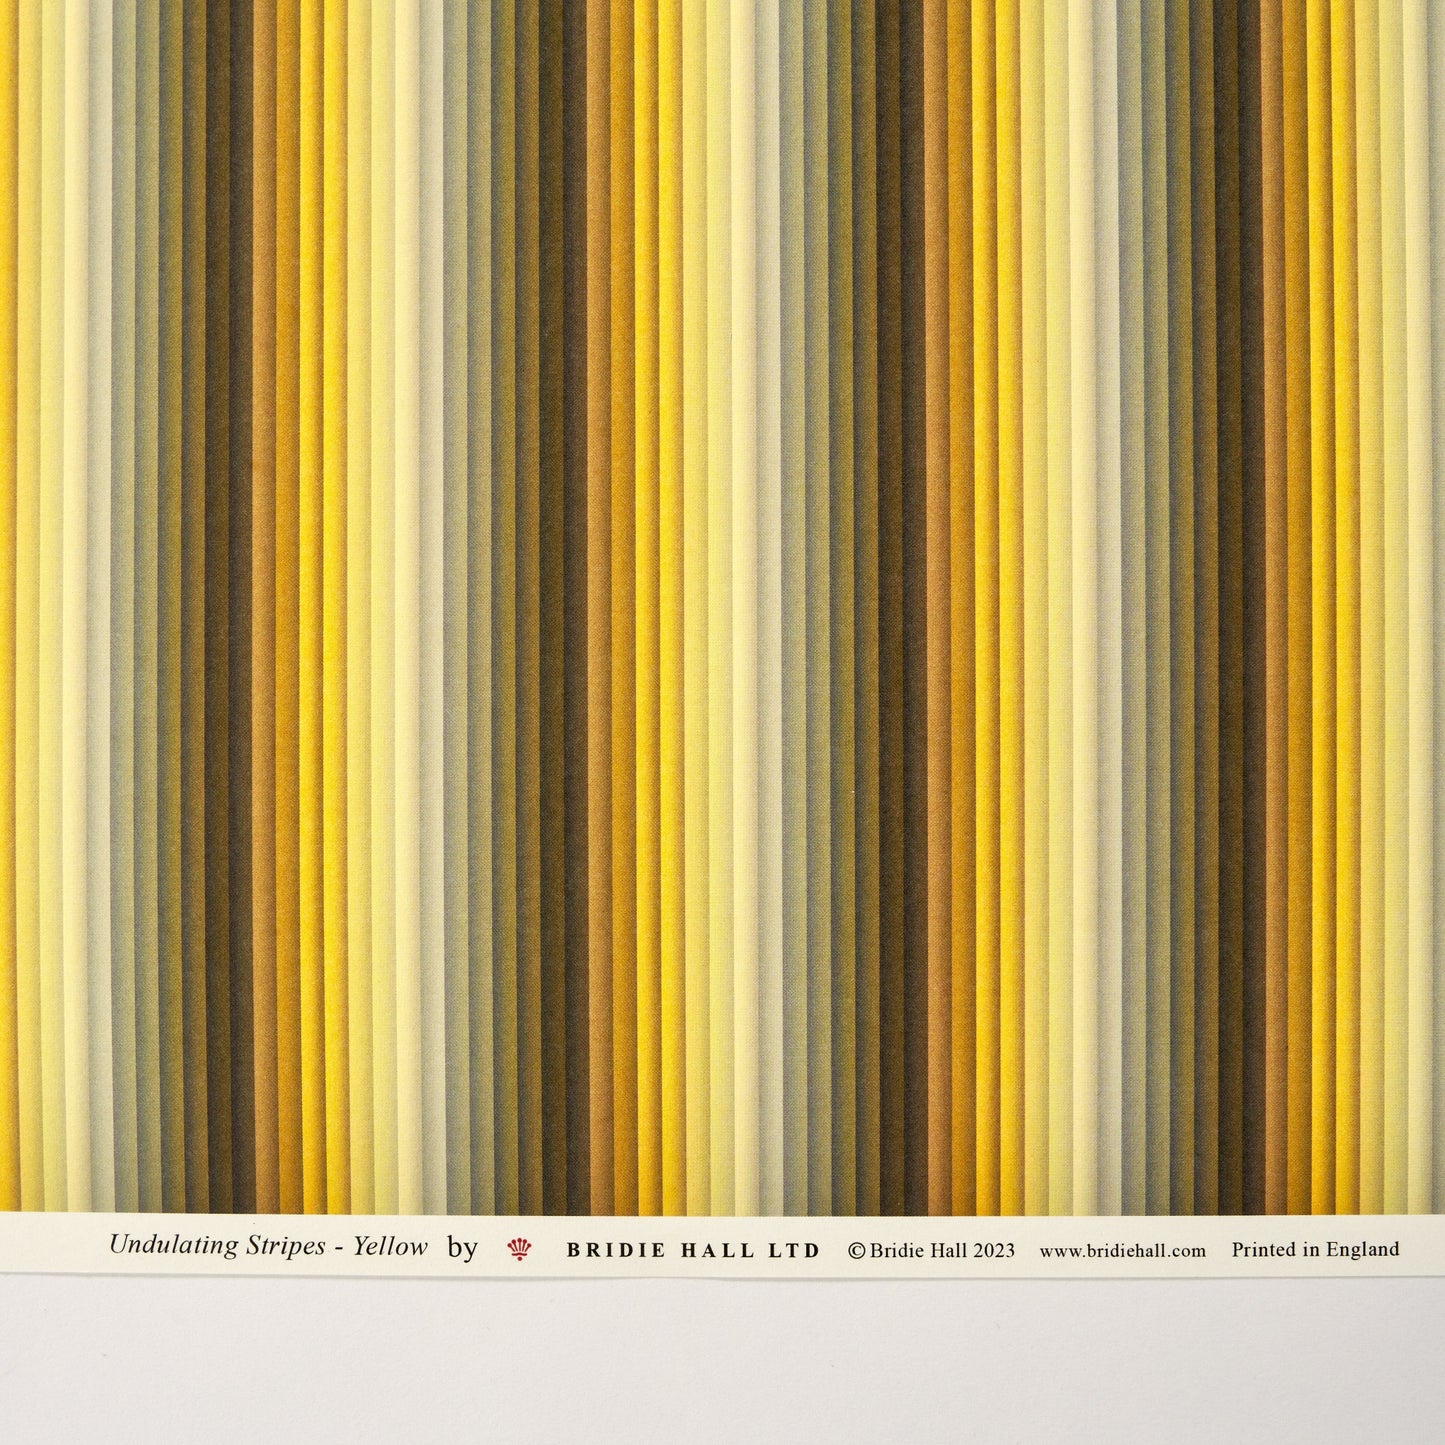 Undulating Stripes - Yellow